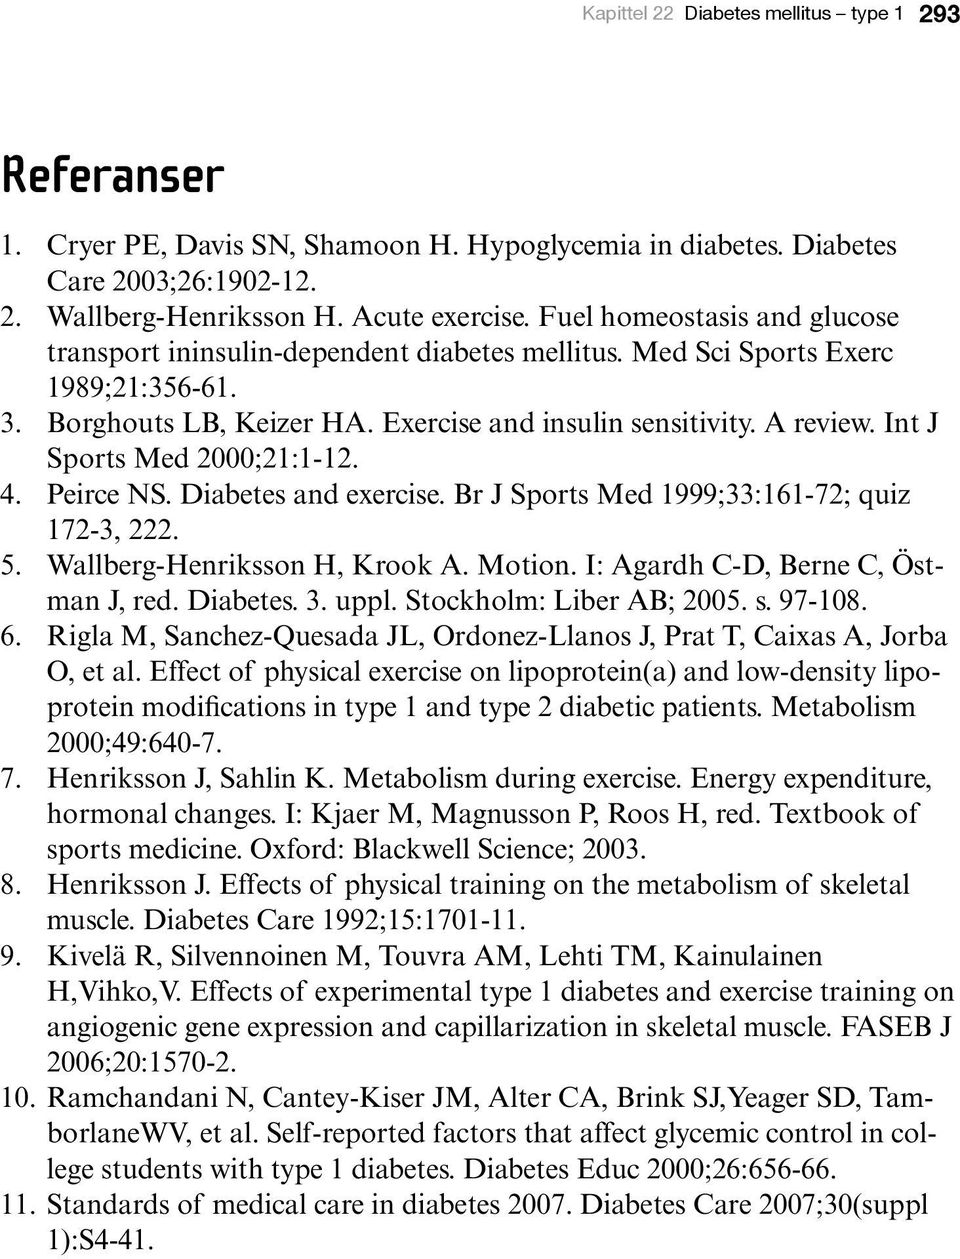 Int J Sports Med 2000;21:1-12. 4. Peirce NS. Diabetes and exercise. Br J Sports Med 1999;33:161-72; quiz 172-3, 222. 5. Wallberg-Henriksson H, Krook A. Motion. I: Agardh C-D, Berne C, Östman J, red.